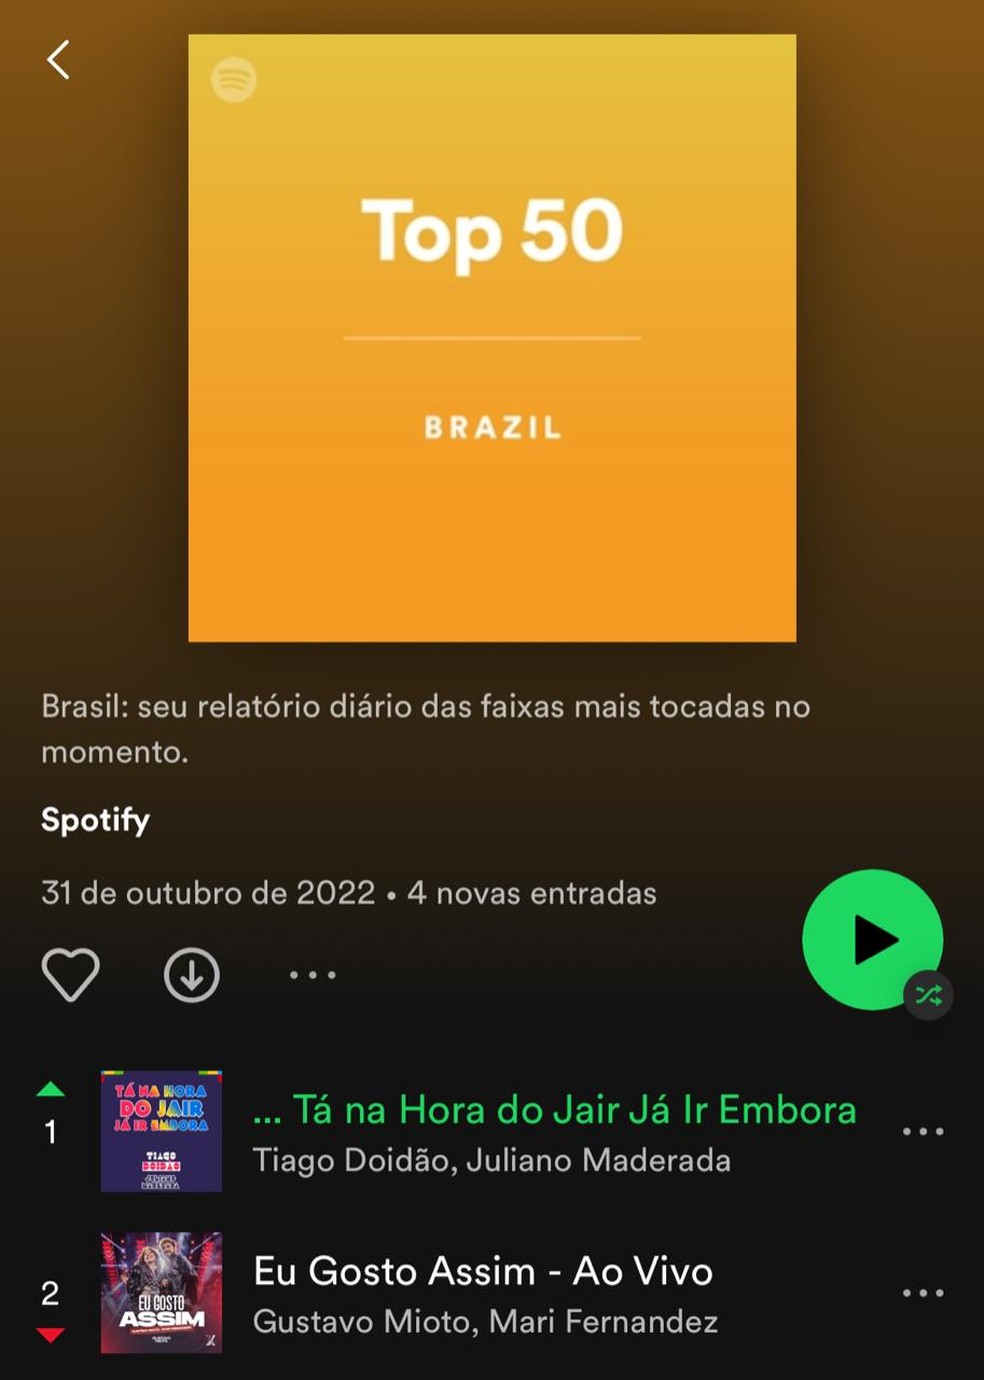 Tá na hora do Jair já ir embora fica em 2º lugar no Spotify Brasil